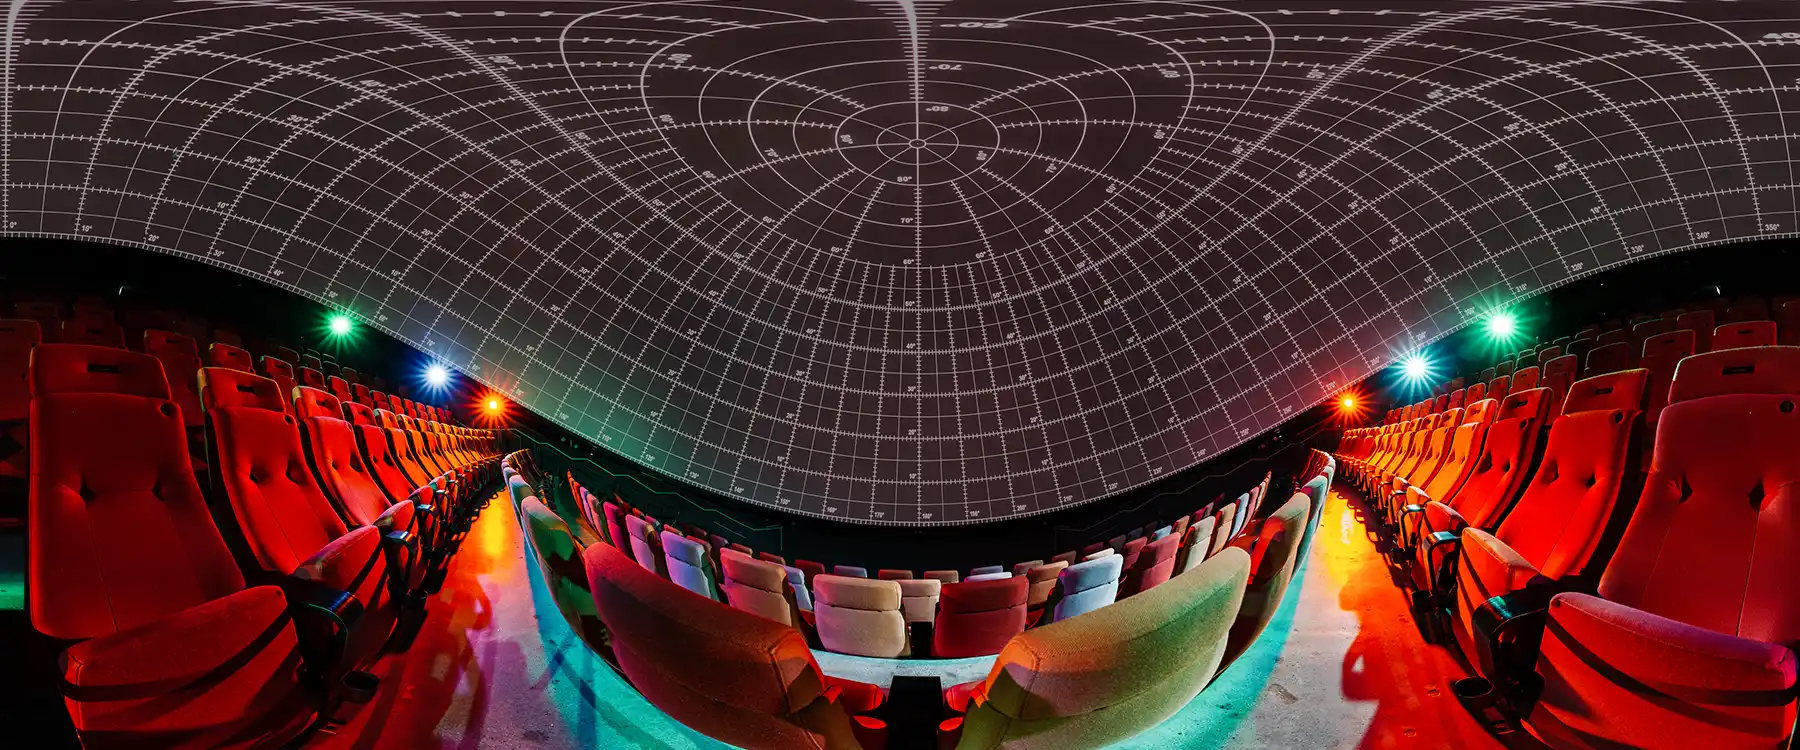 NEST Dome 8M - Telus Spark - Oct. 2020 